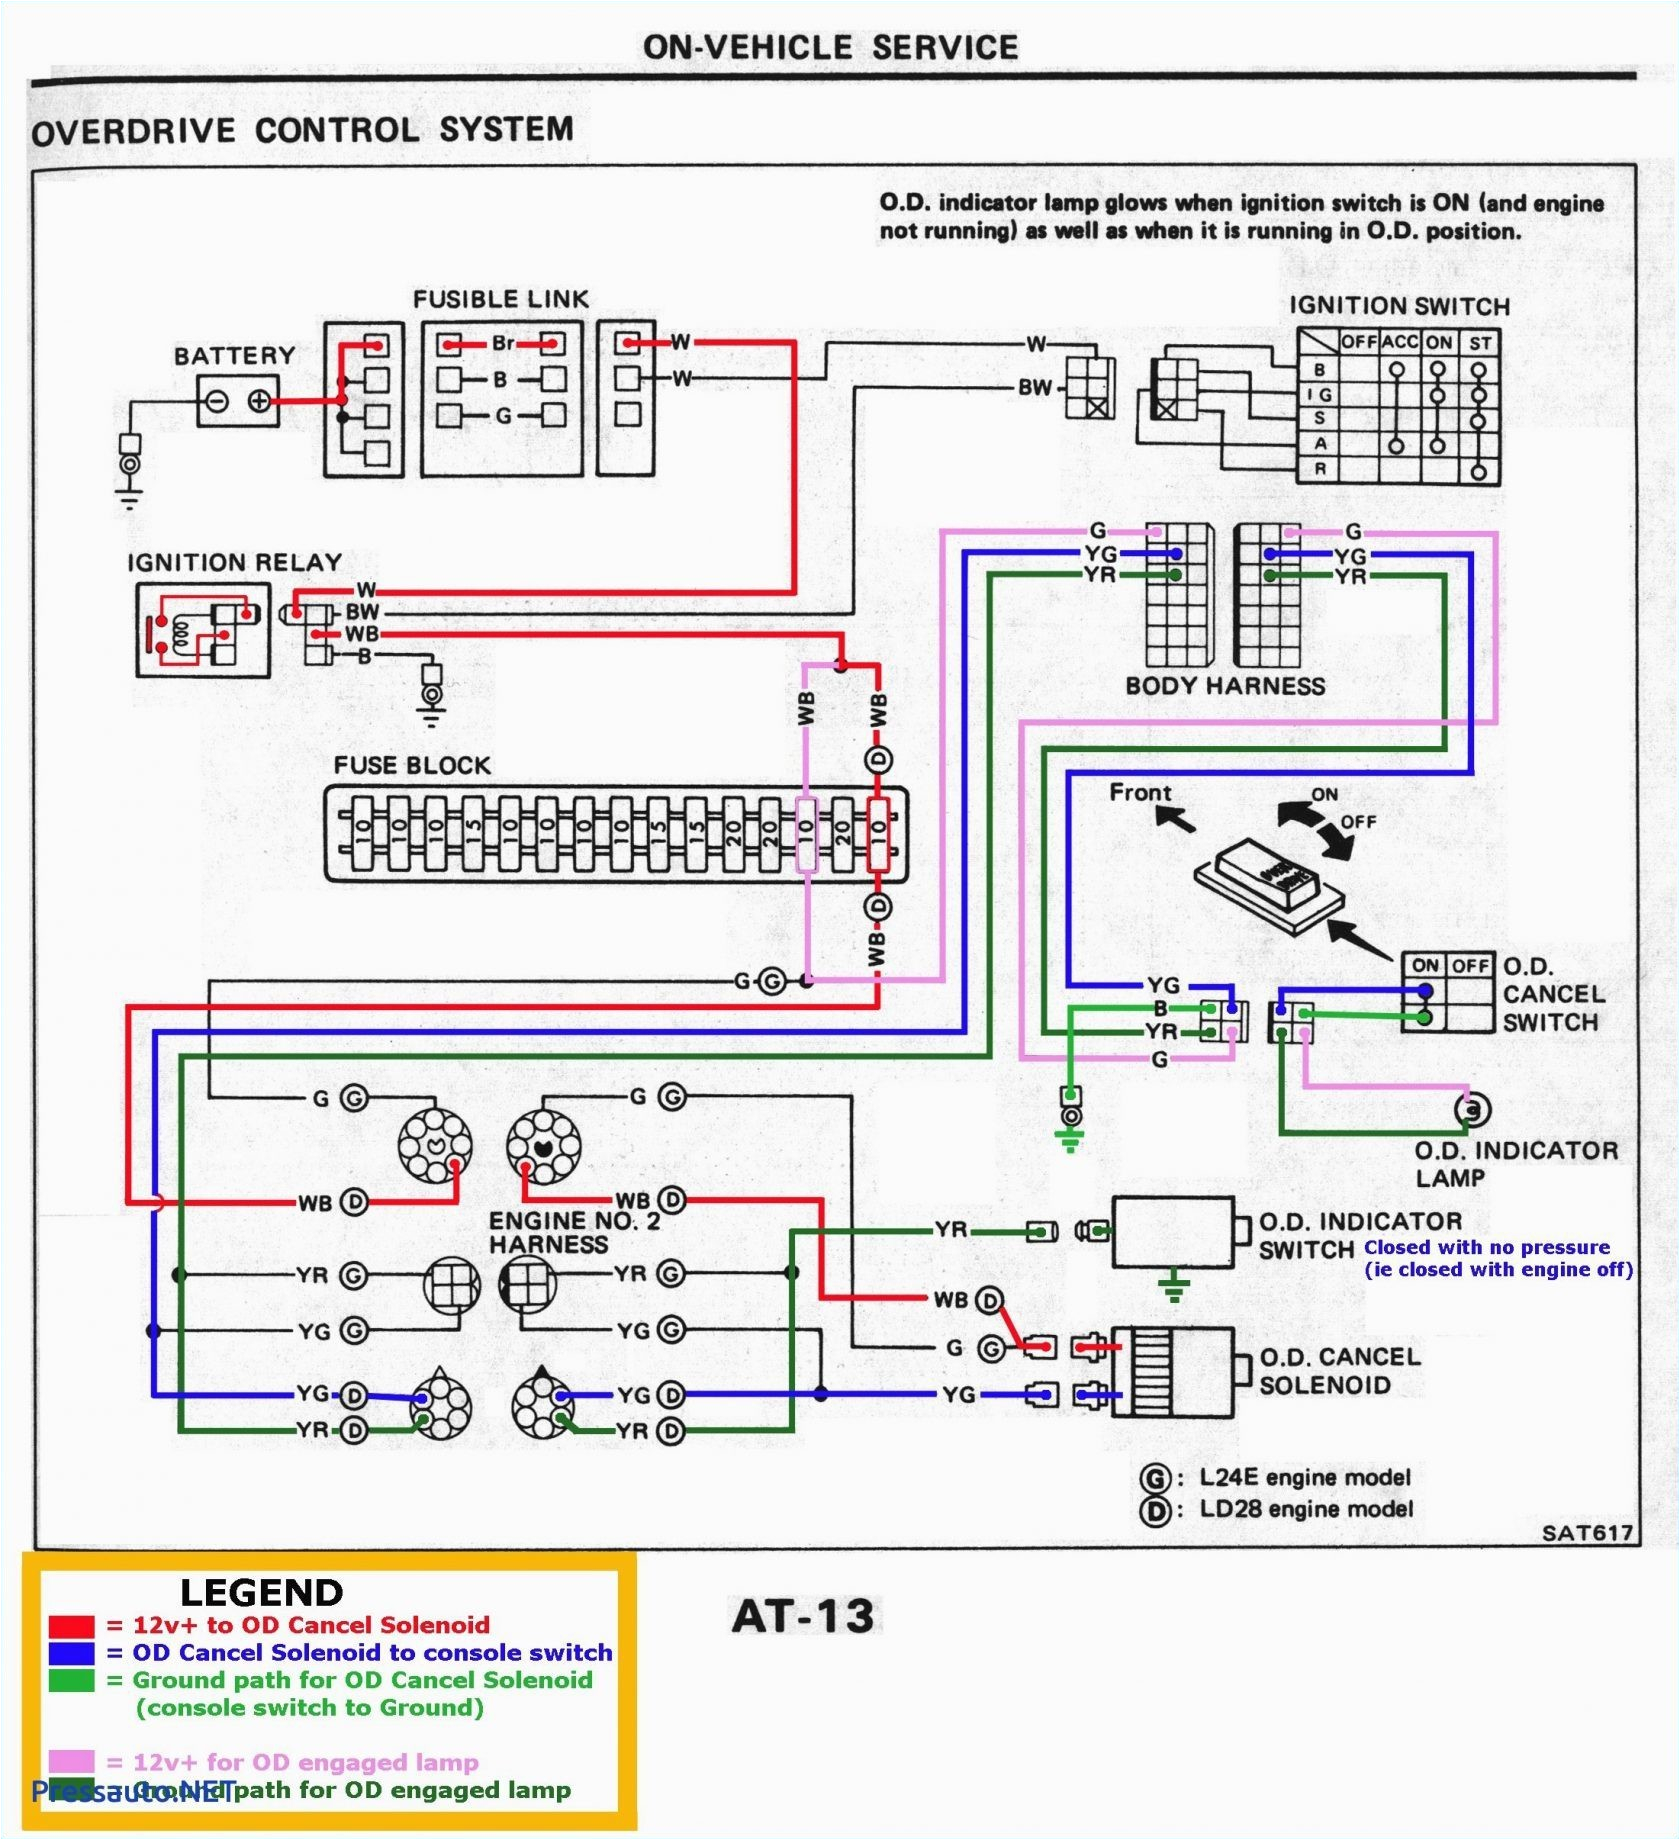 weldon wiring diagram schema diagram preview effikal model gvd wiring diagram